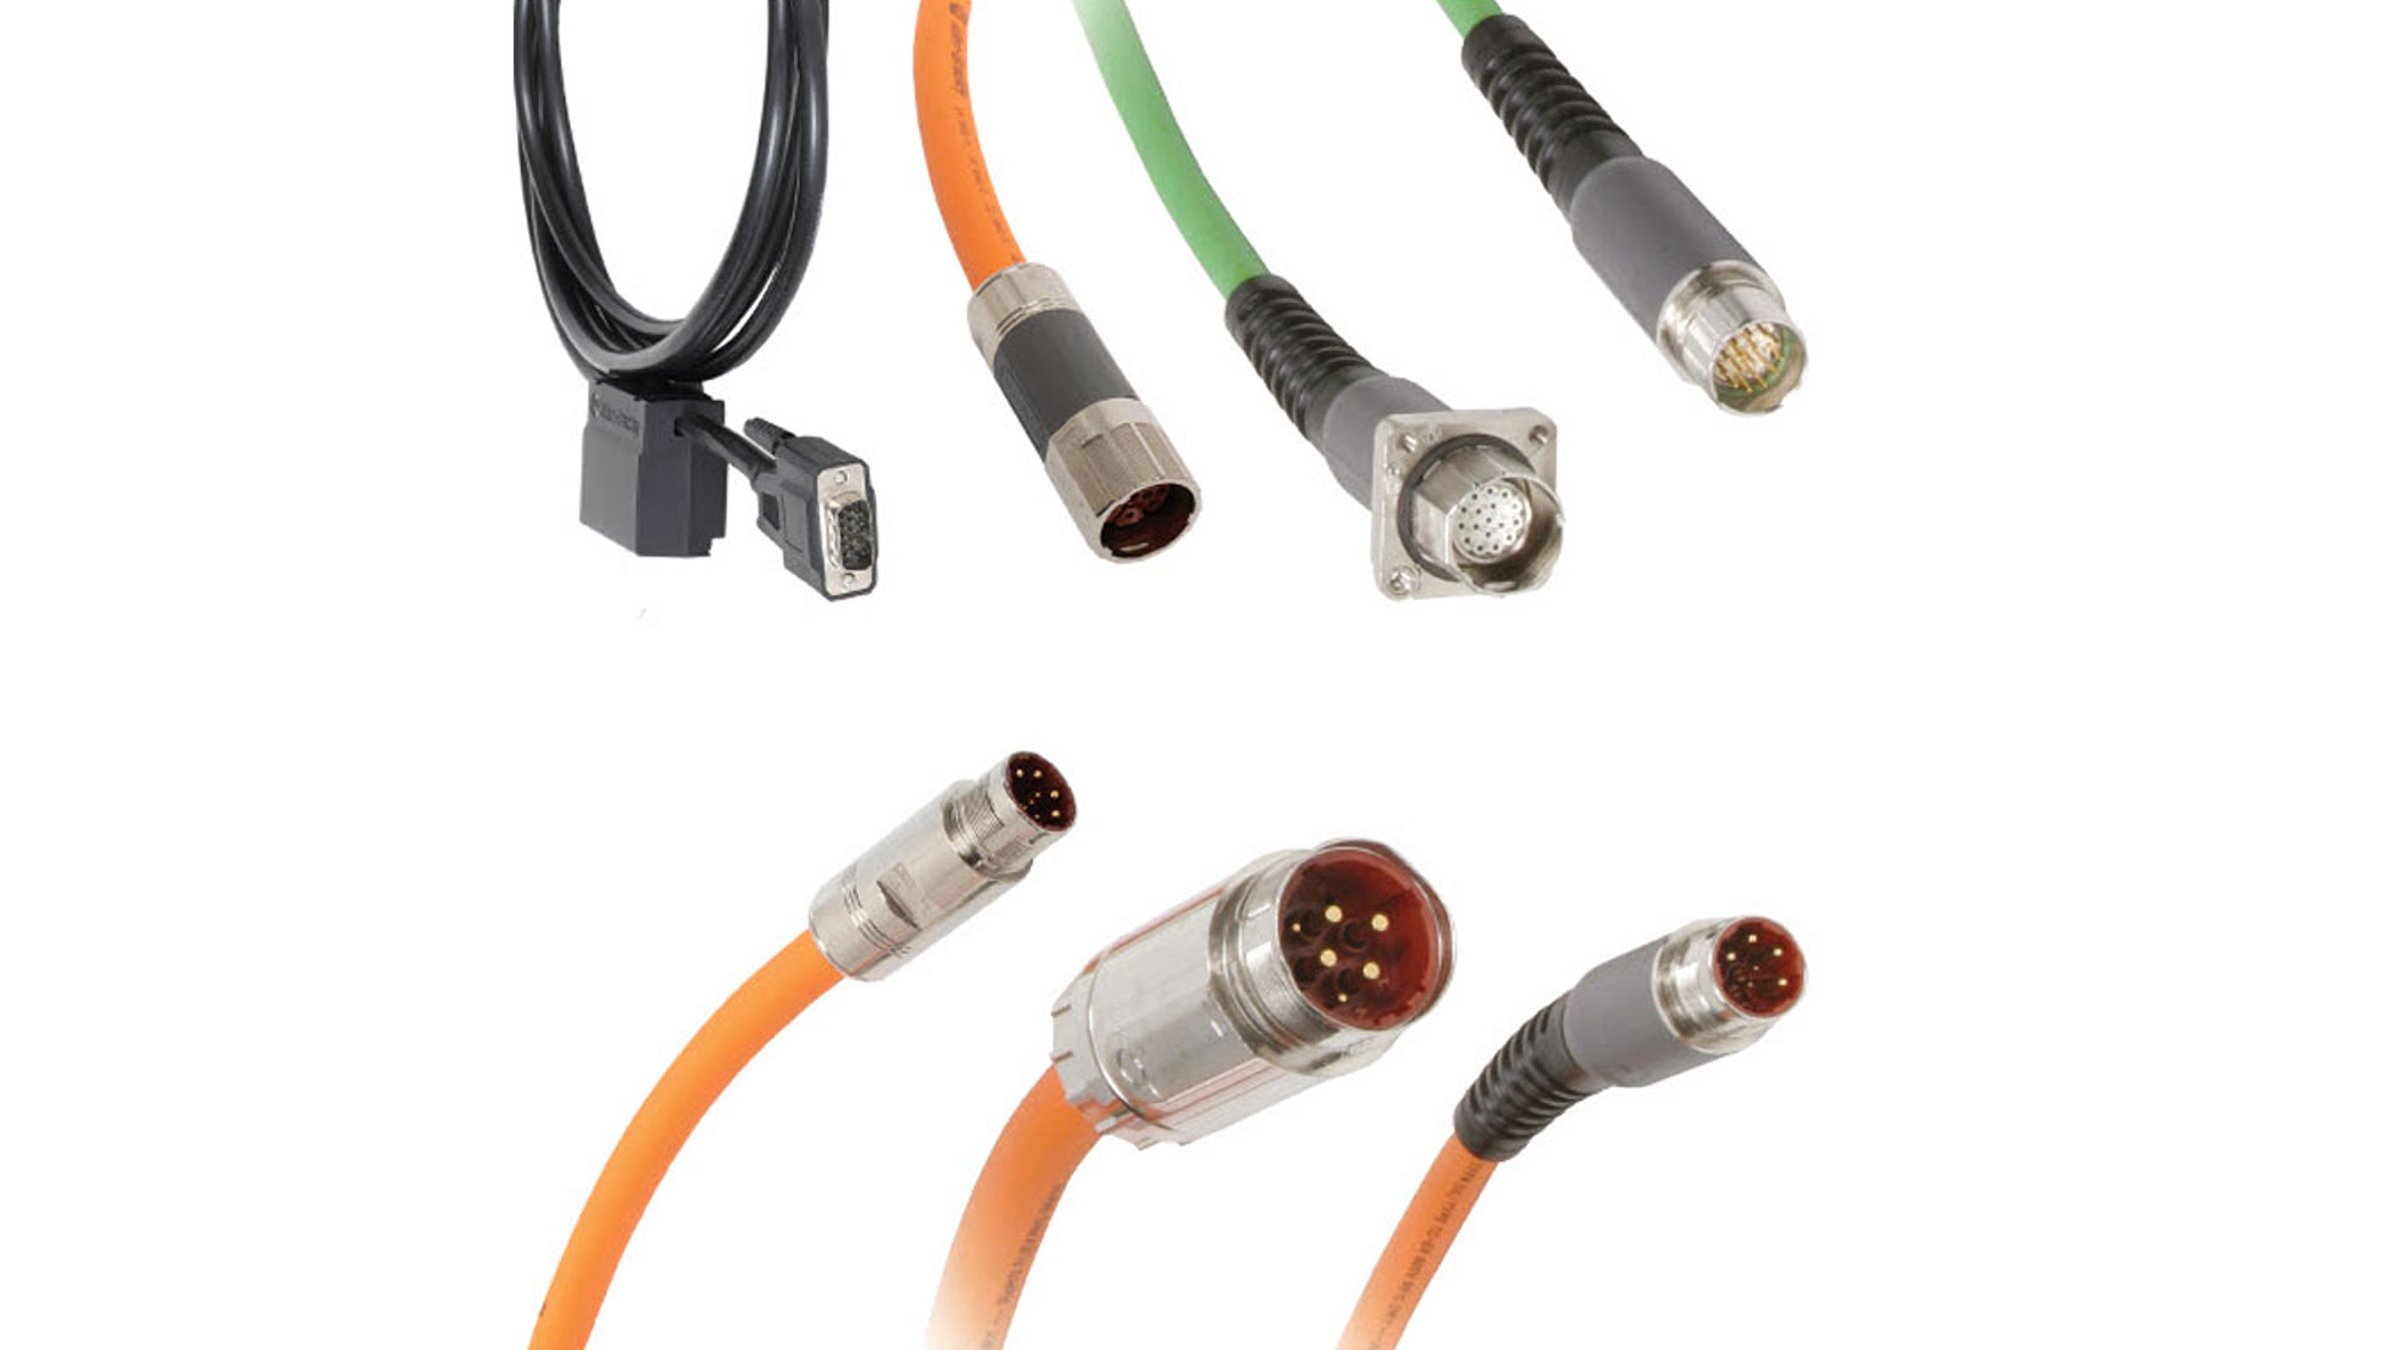 Allen-Bradley 型號 2090 Kinetix® 電纜是完整的標準連續柔性電纜系列，搭配 SpeedTEC® DIN 接頭，可實現四分之一匝快速連線。